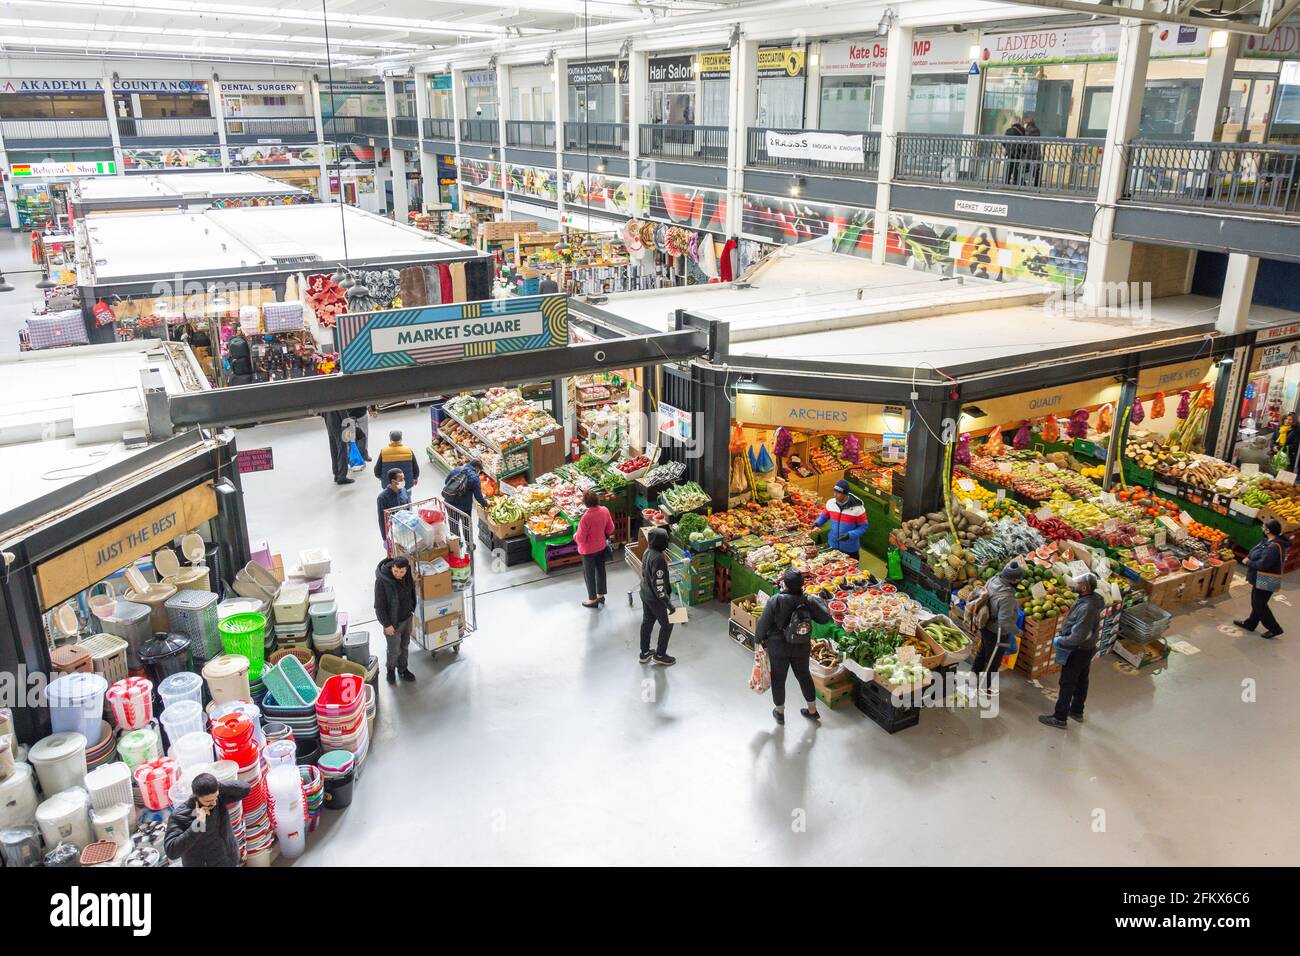 Indoor market at Edmonton Green Shopping Centre, The Broadway, Edmonton, London Borough of Enfield, Greater London, England, United Kingdom Stock Photo